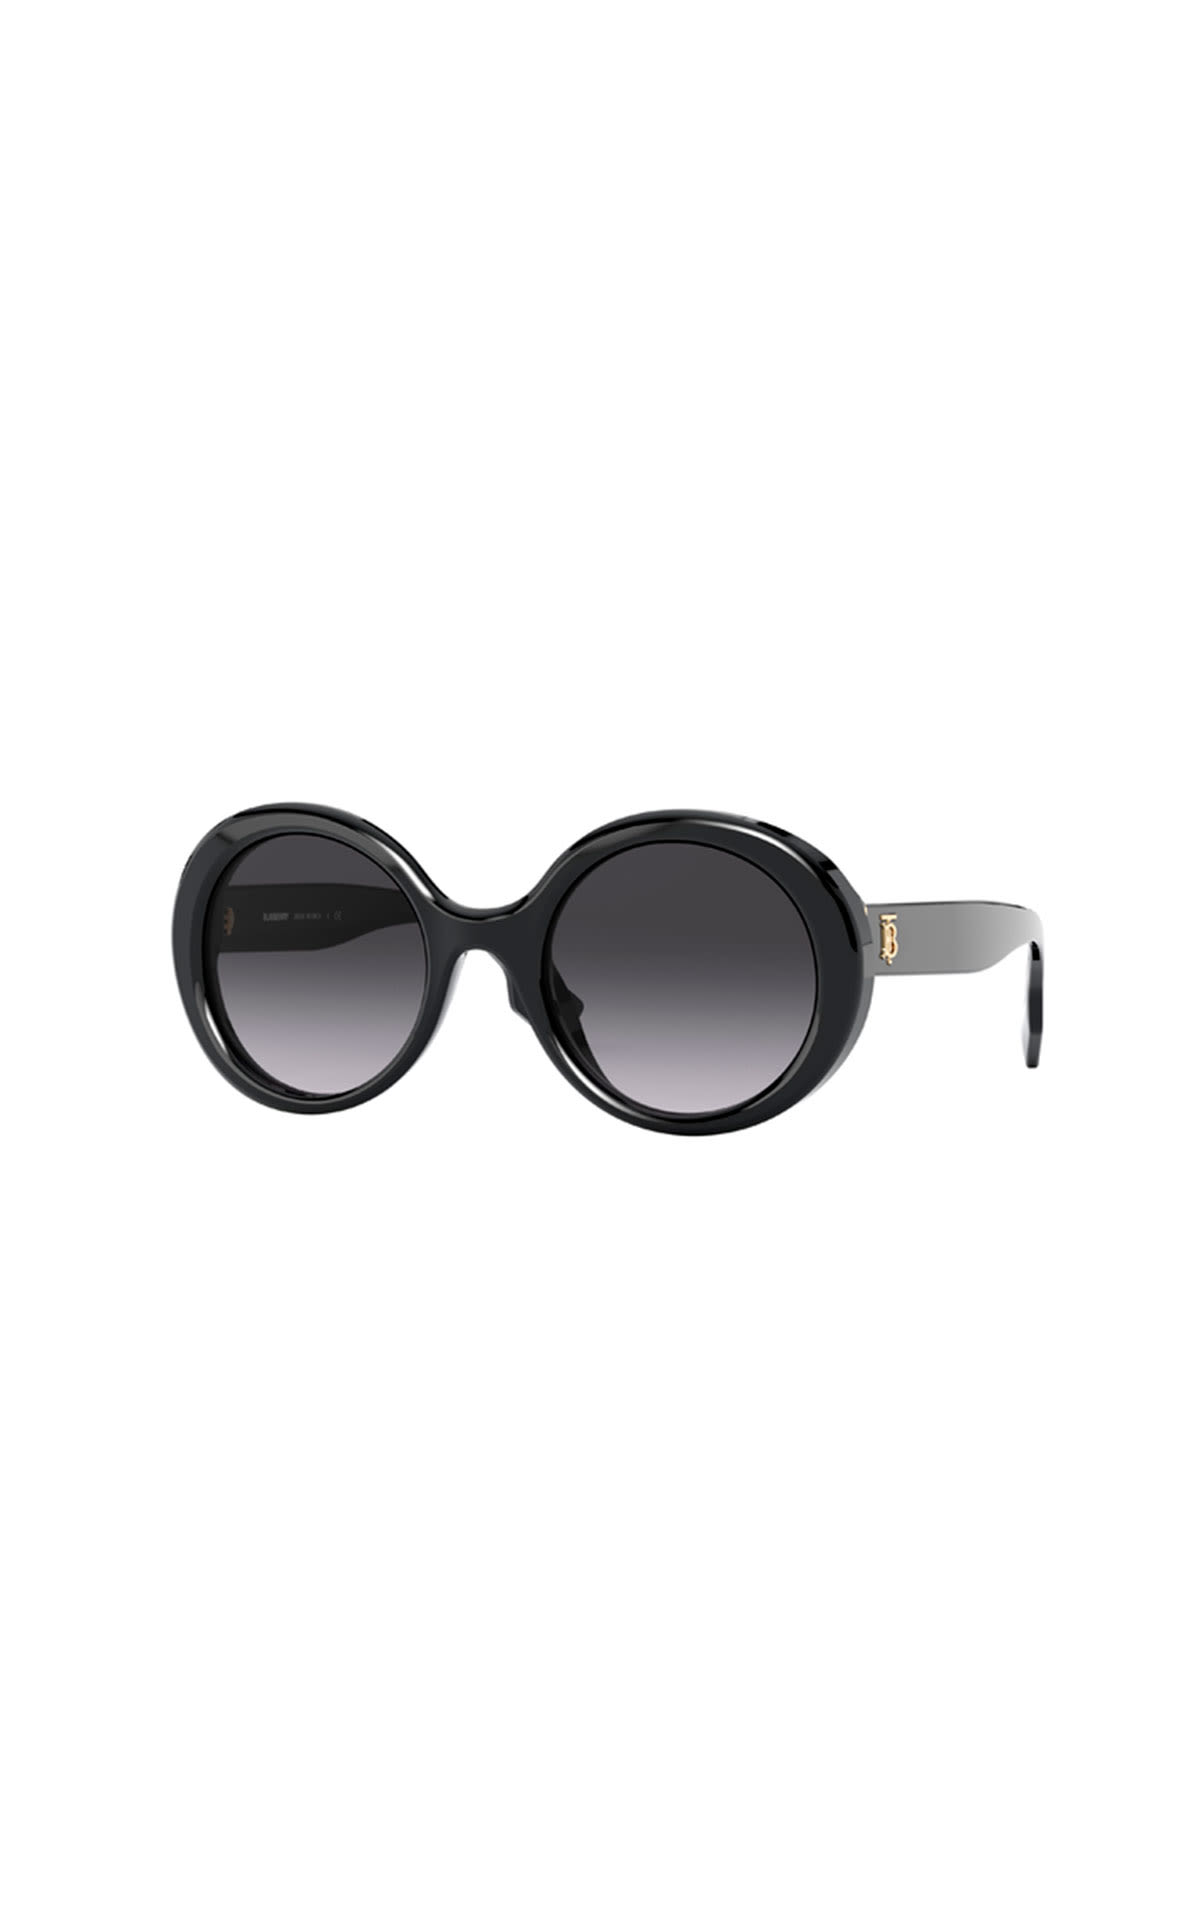 Black round plastic sunglasses sunglasshut